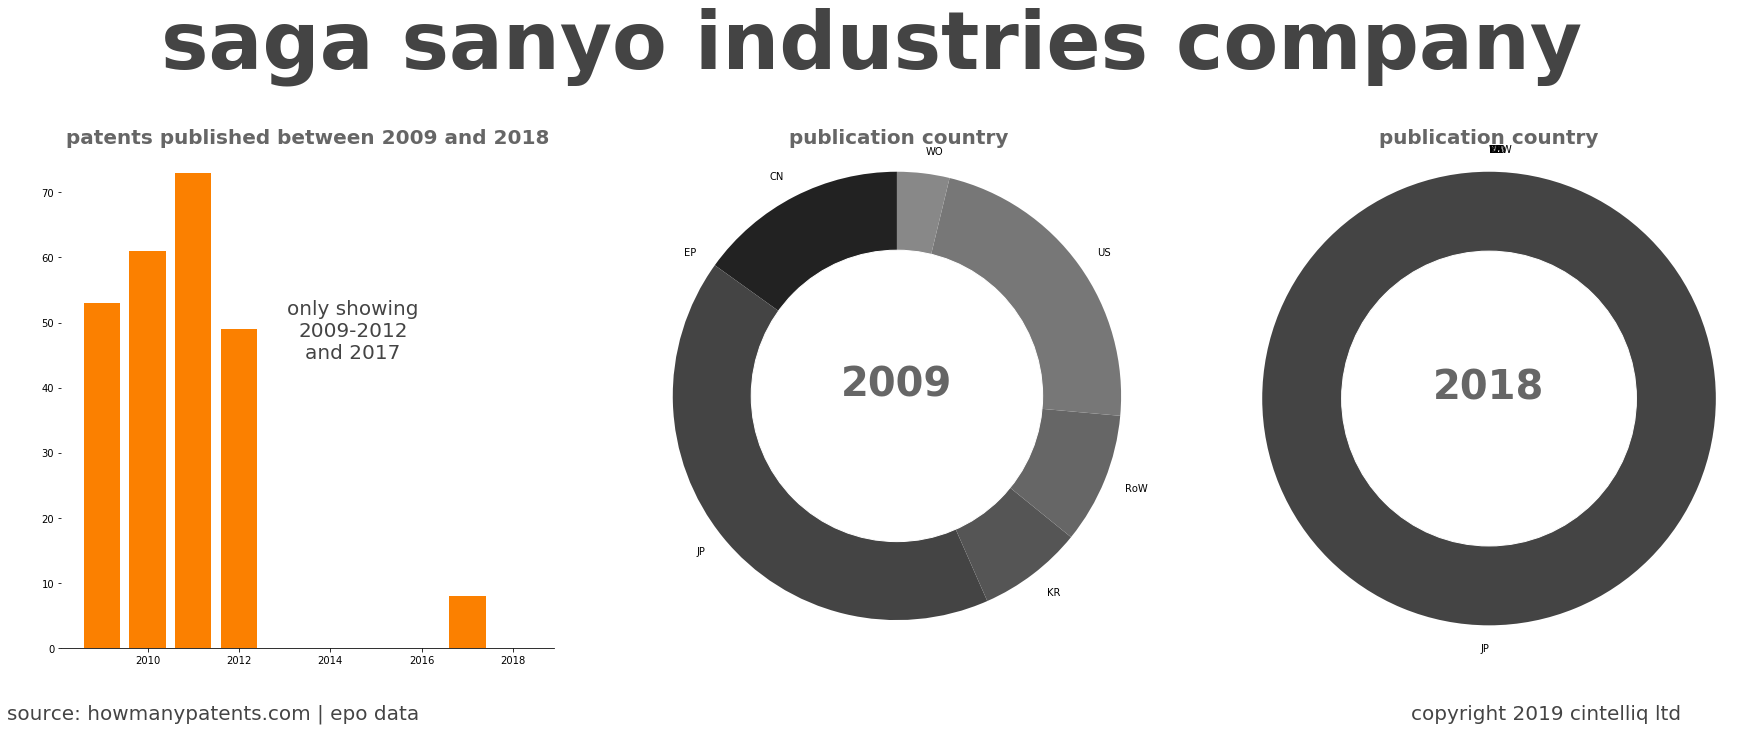 summary of patents for Saga Sanyo Industries Company